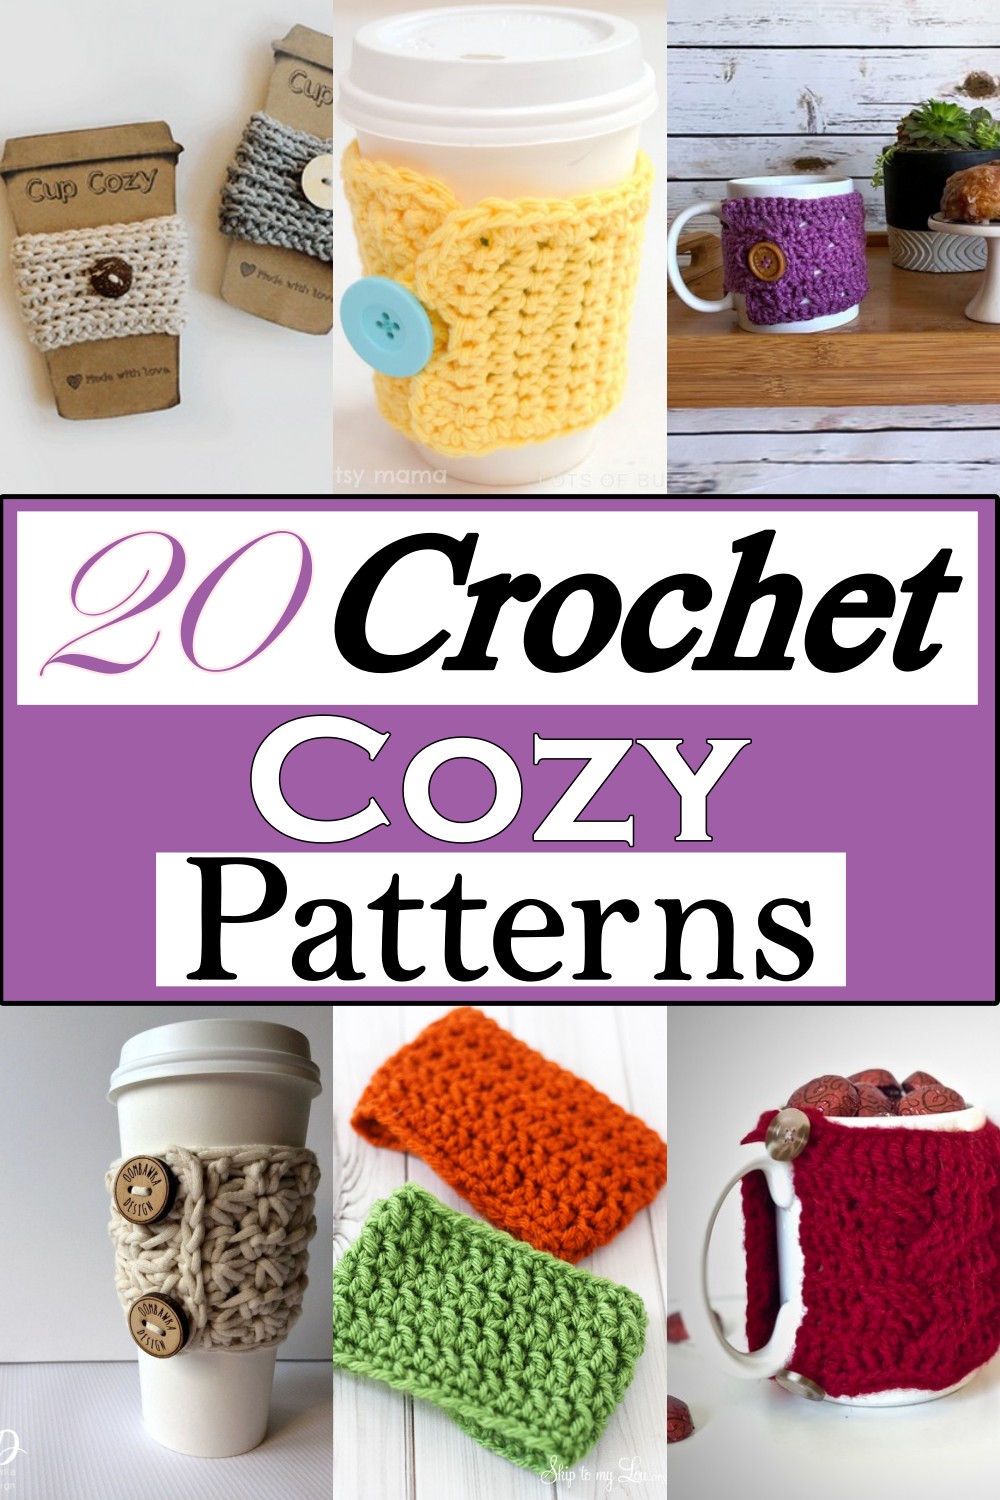 Free Crochet Cozy Patterns